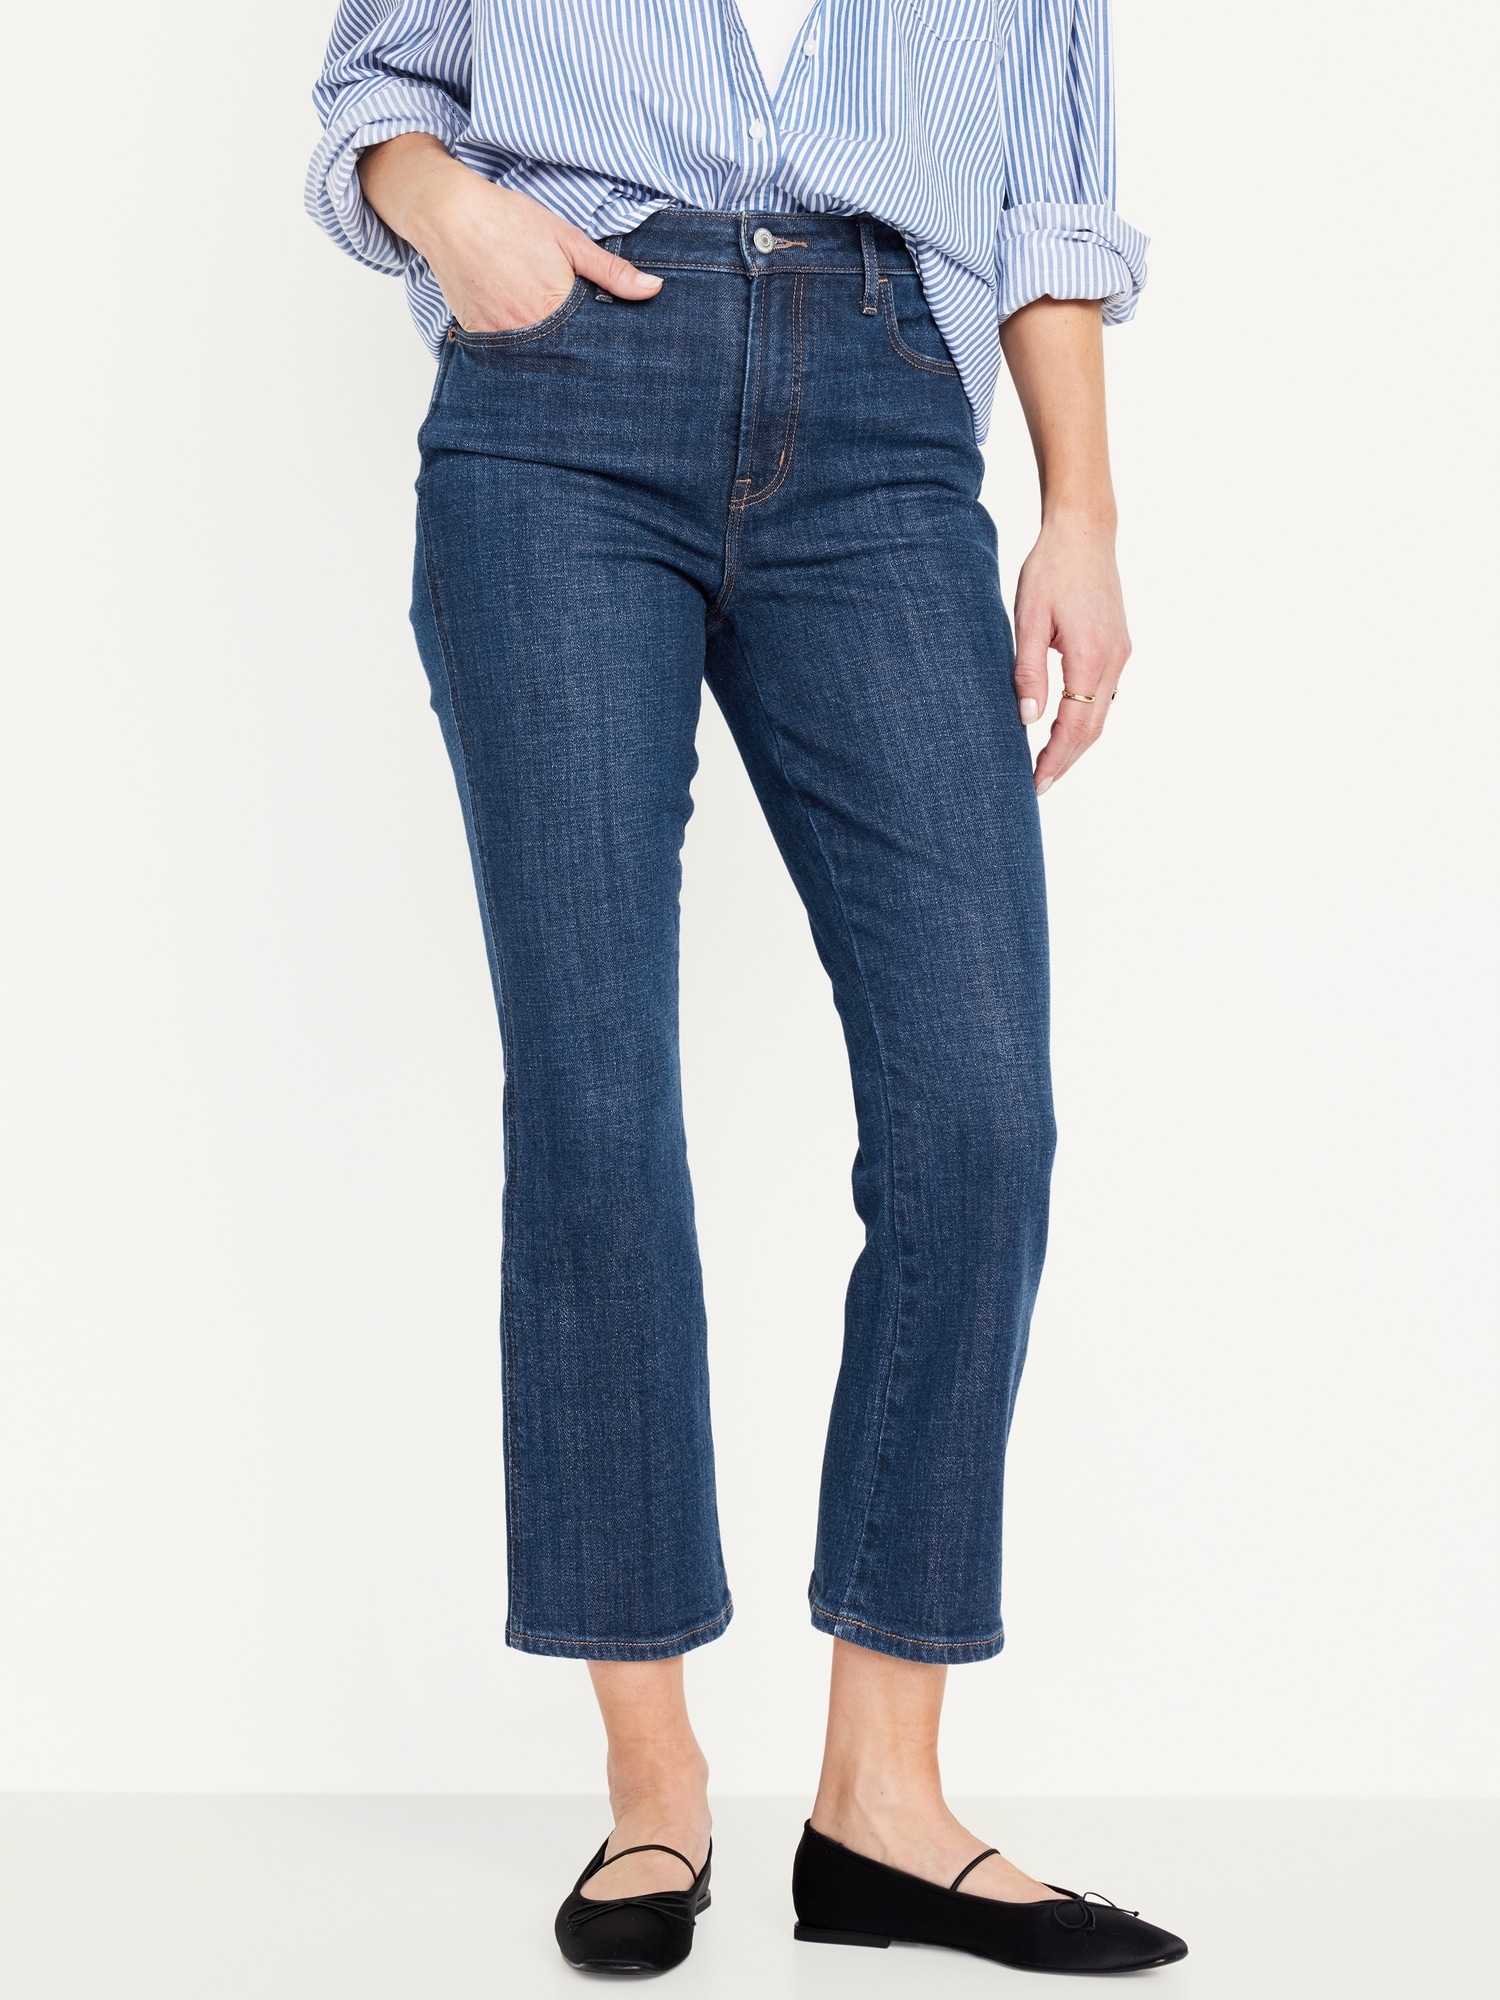 Women's Cropped Jeans